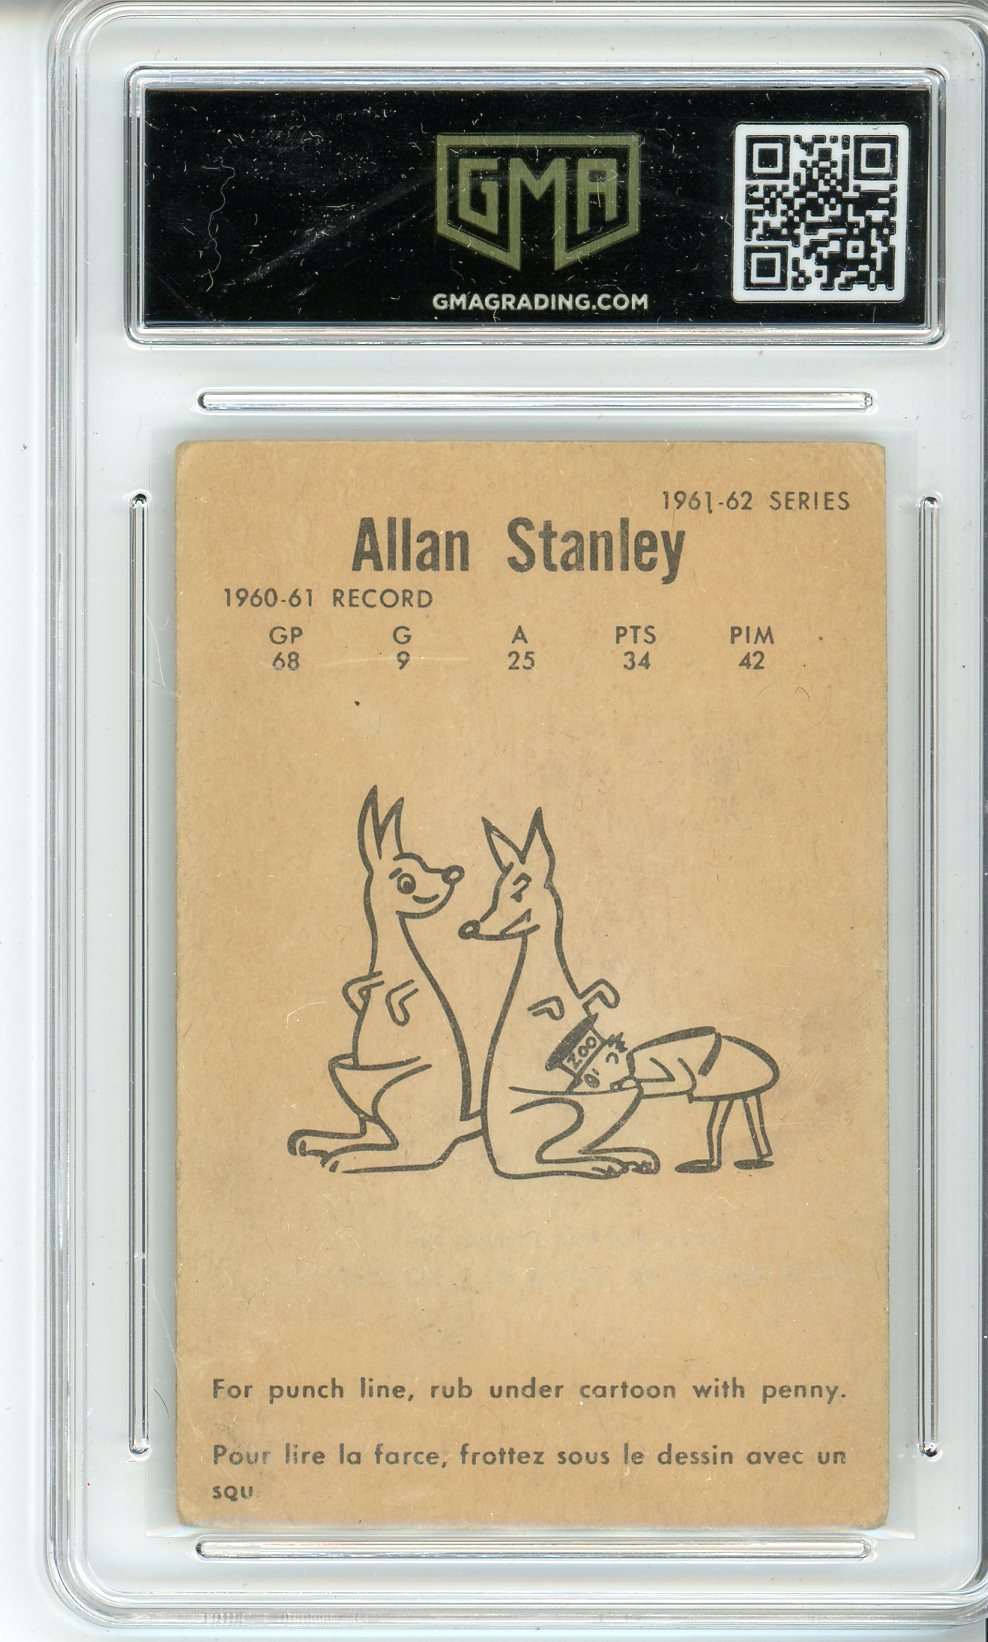 1961 Parkhurst Allan Stanley #16 Graded Card GMA 4